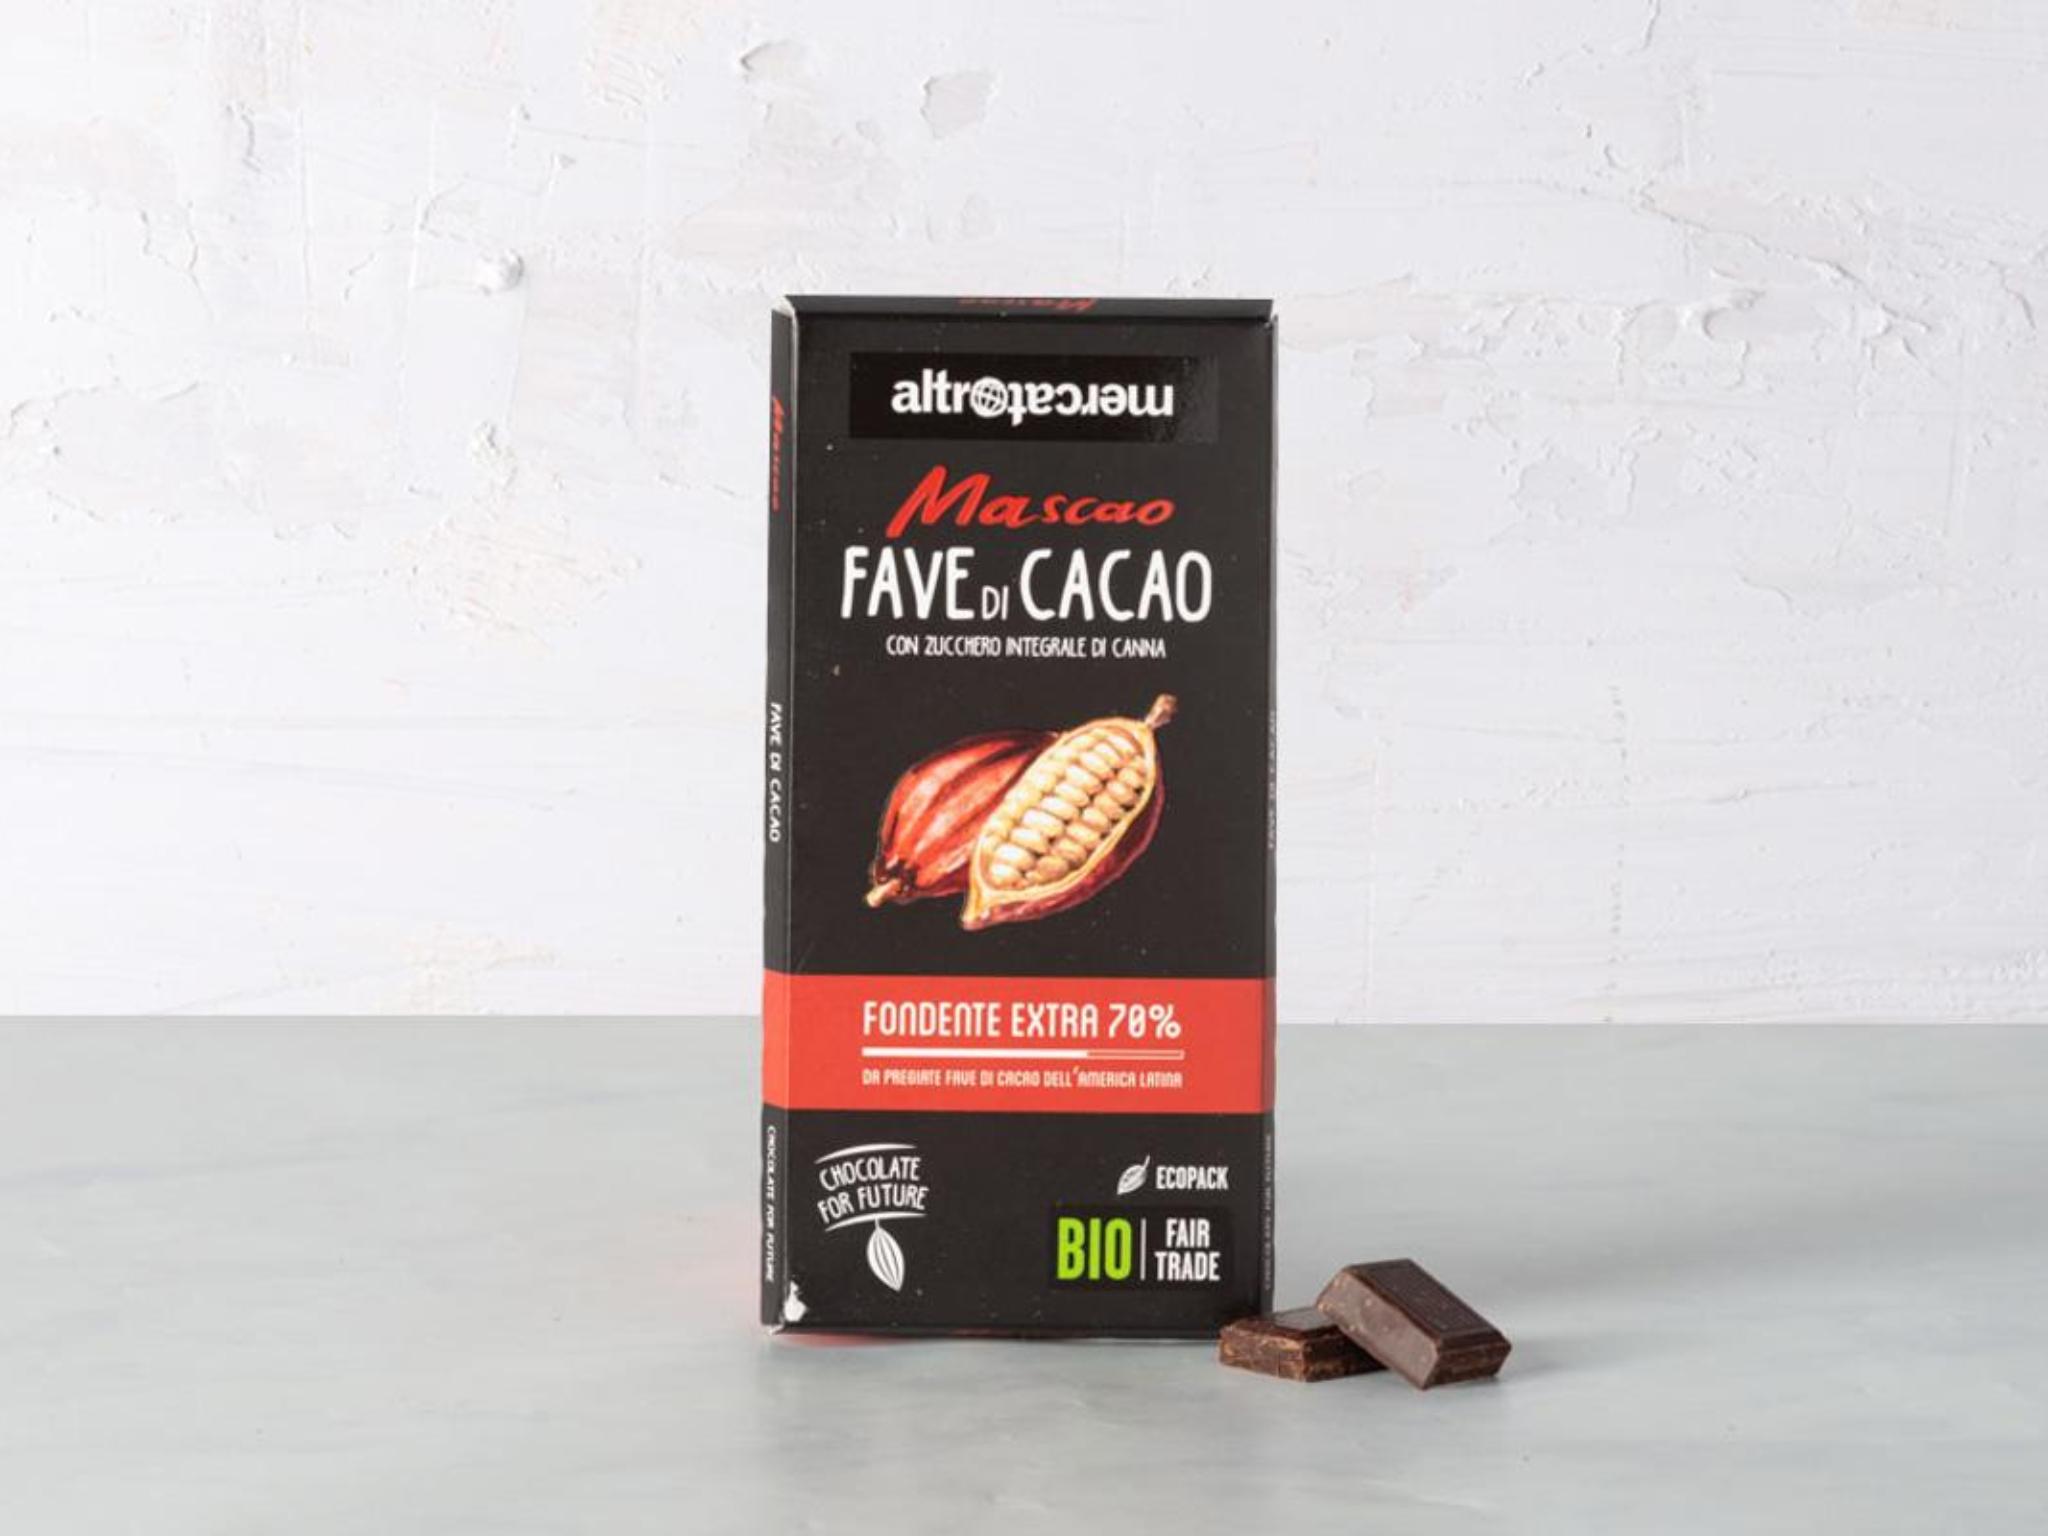 Cioccolato Mascao fondente extra 70% fave di cacao BIO